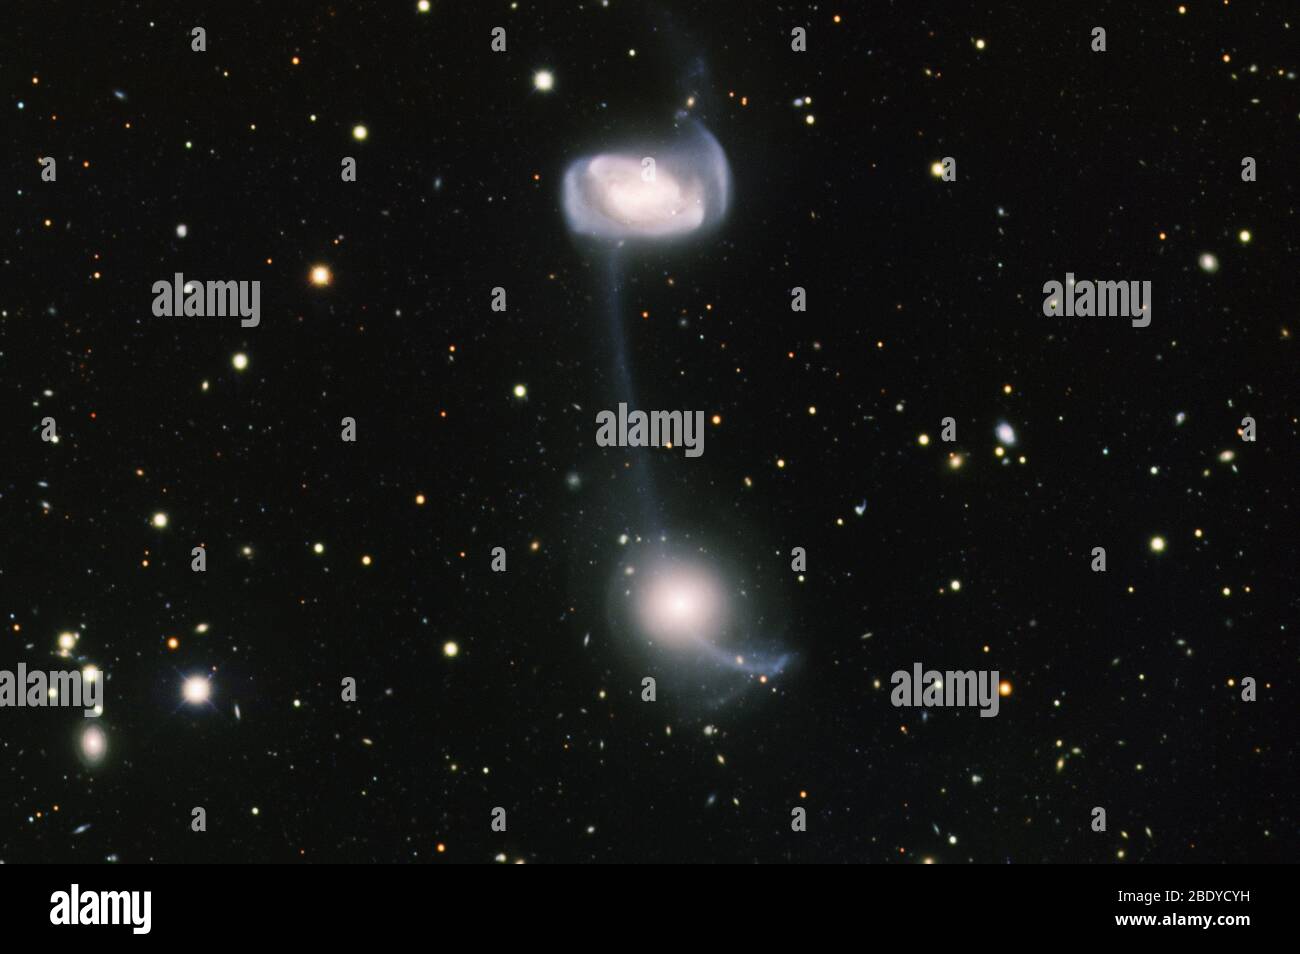 Arp 104, Keenan's System Galaxies Stock Photo